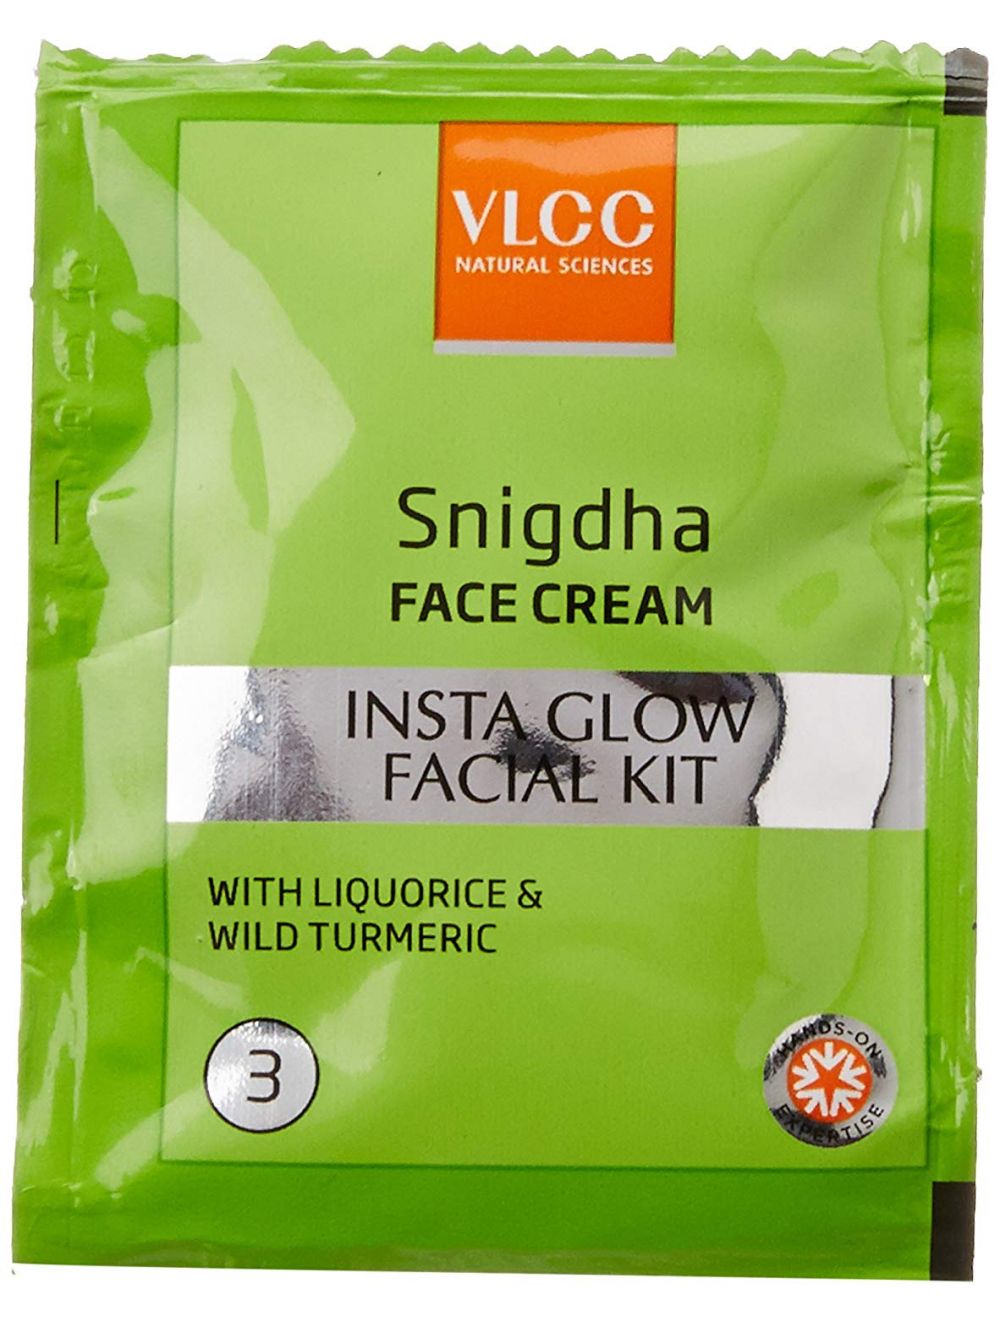 VLCC Insta Glow 5 Facial Kit - Niram